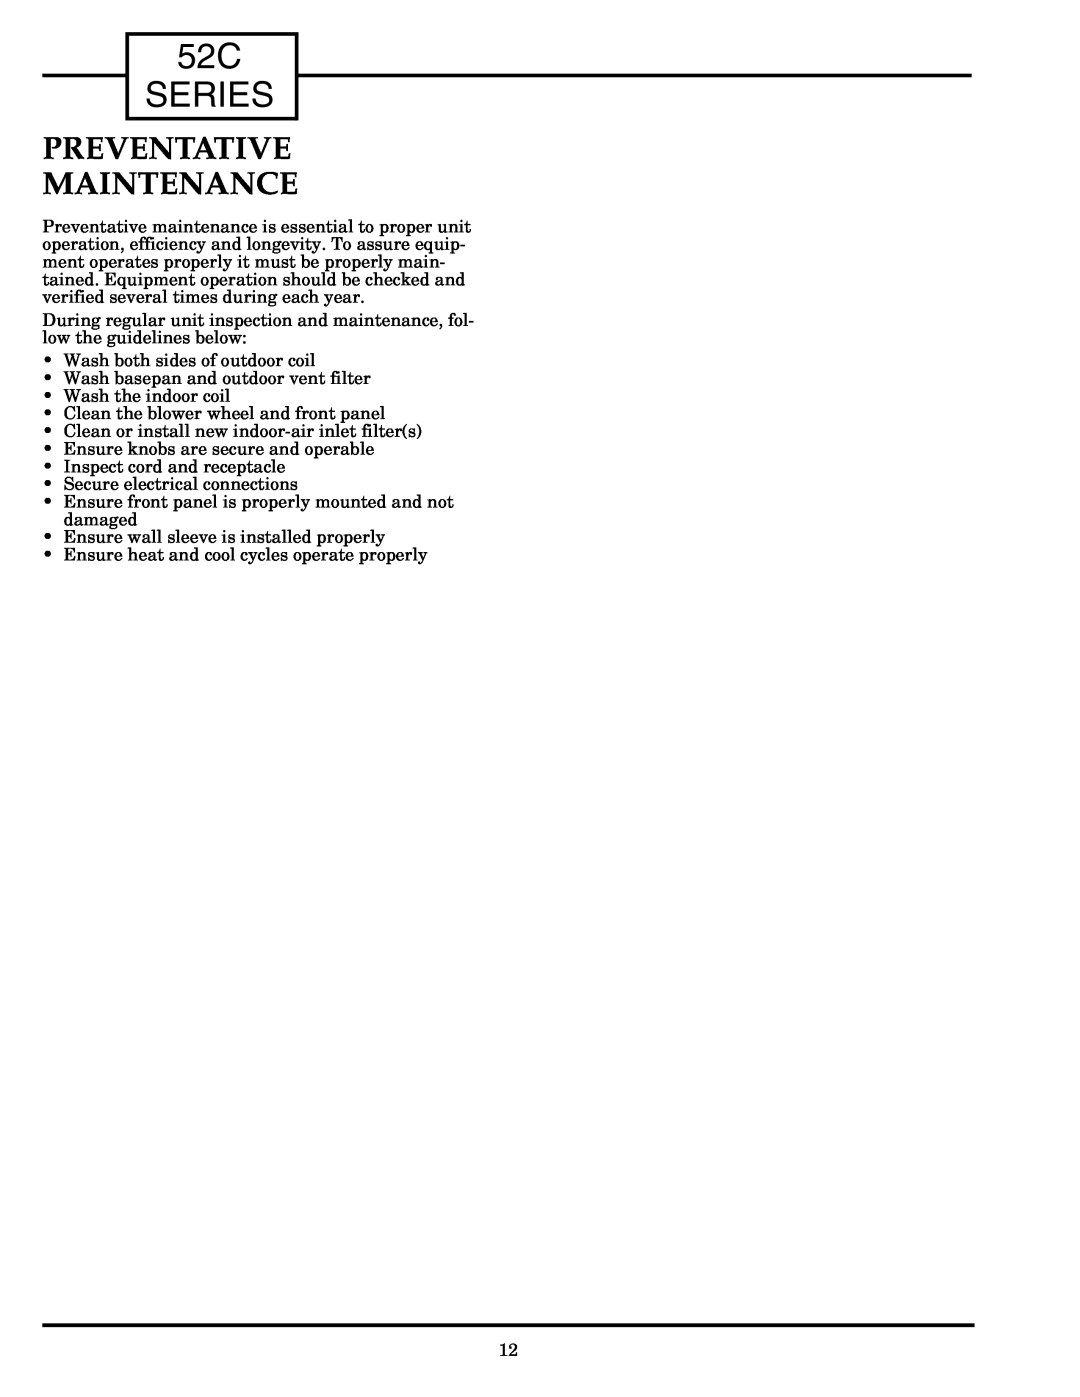 Carrier Access owner manual Preventative Maintenance, 52C SERIES 